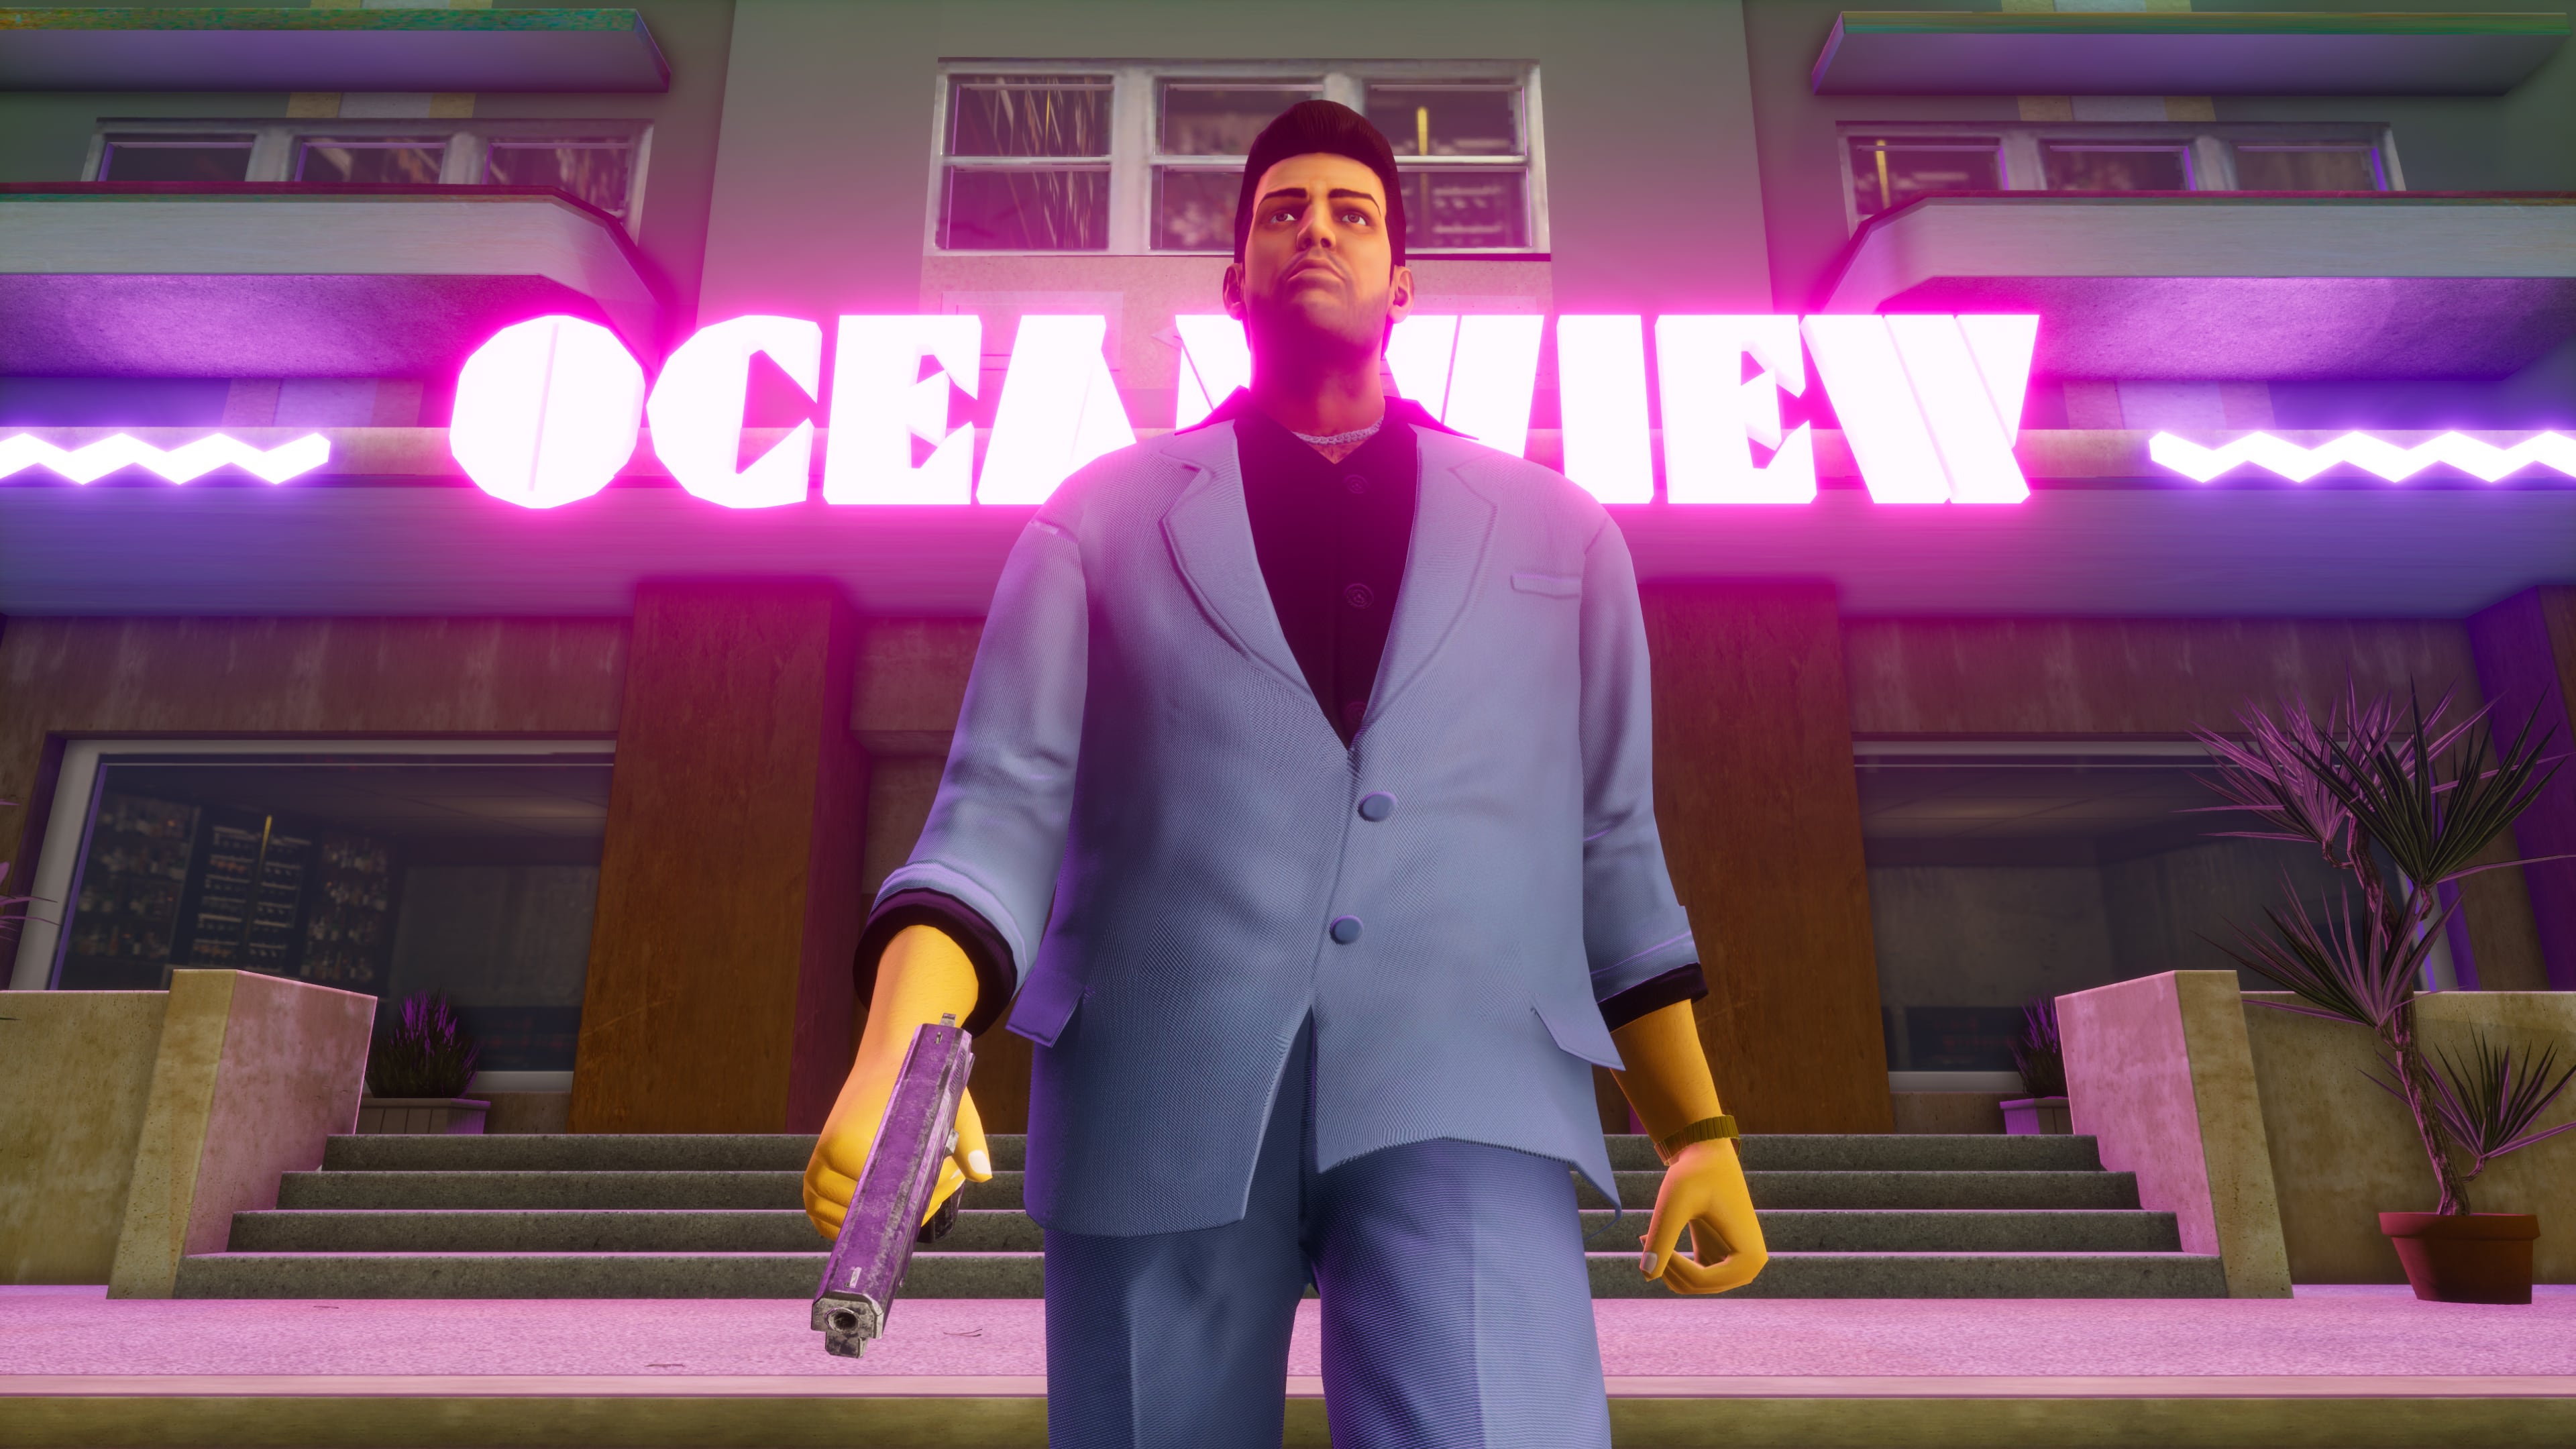 Captura de tela da Vice City remasterizada de Grand Theft Auto: The Trilogy - The Definitive Edition.